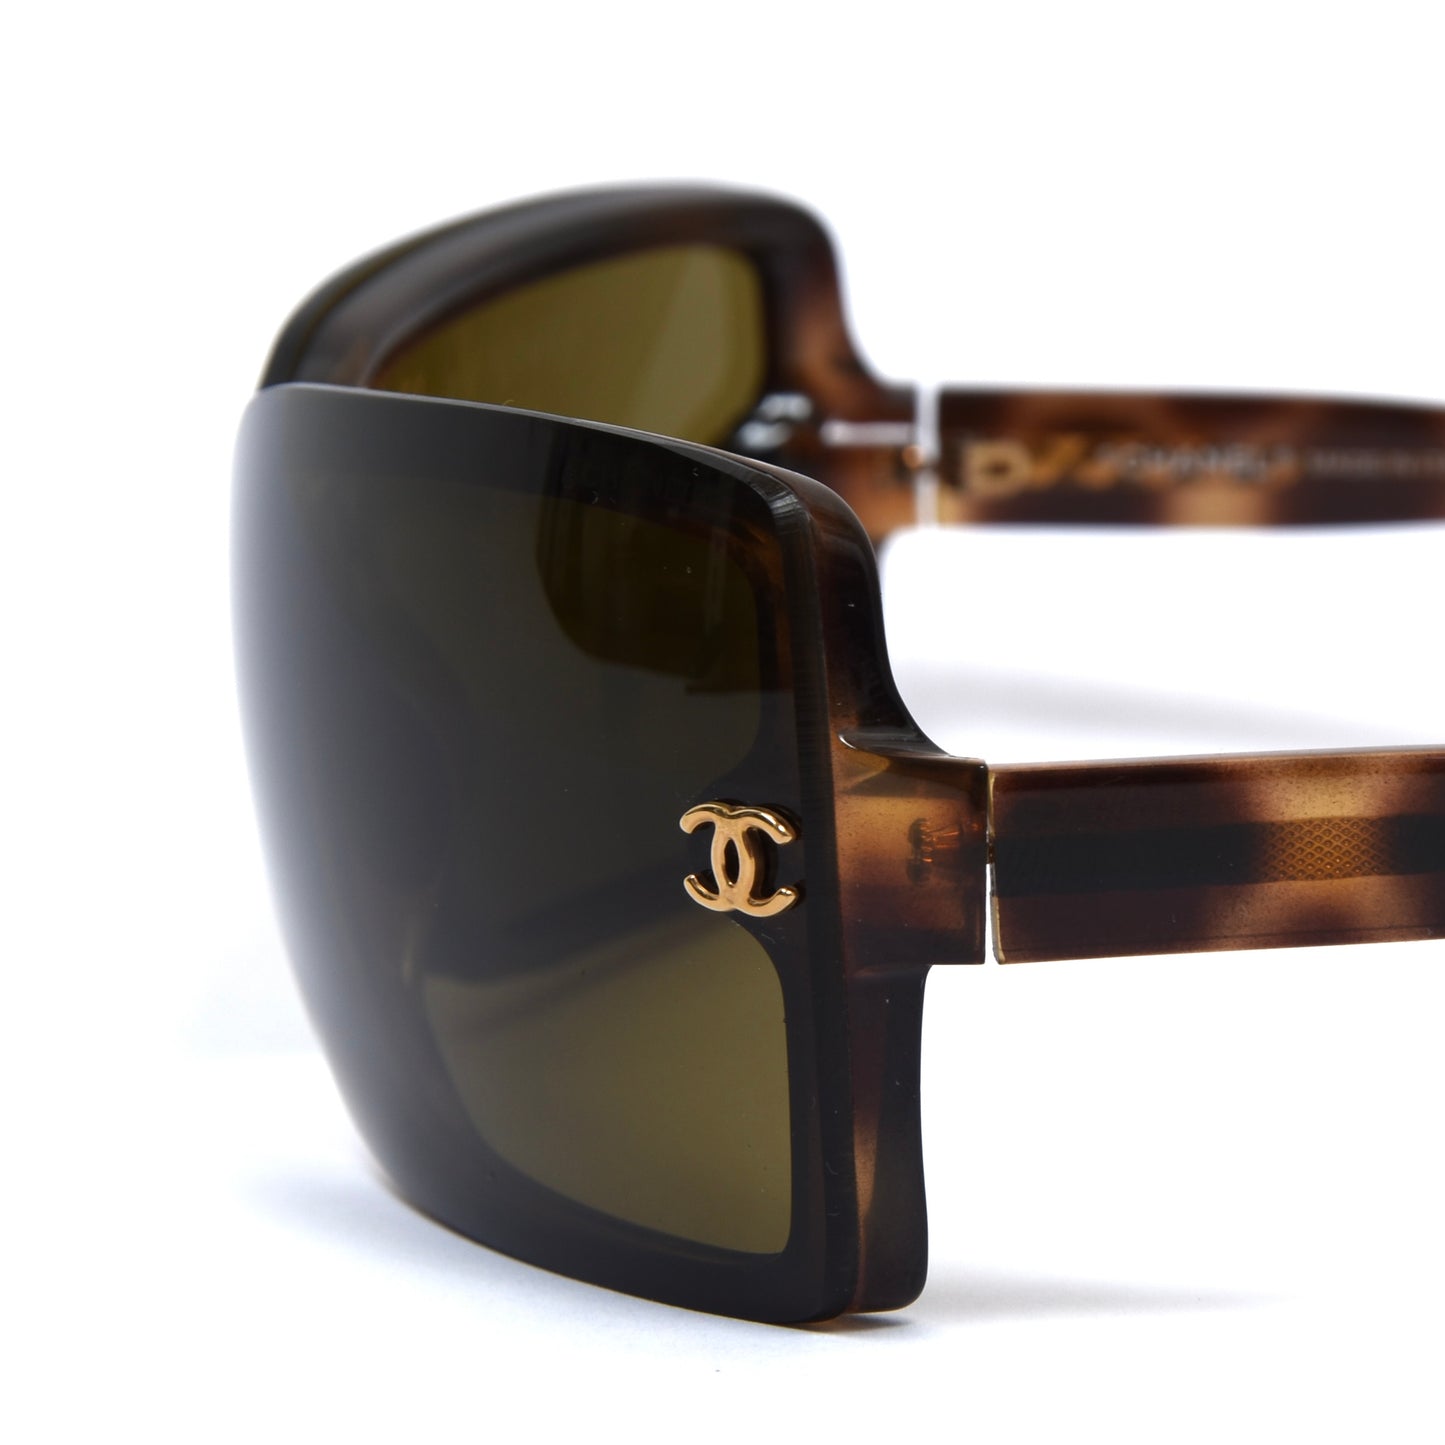 Chanel Mod. 5065 Large Sunglasses - Tortoise